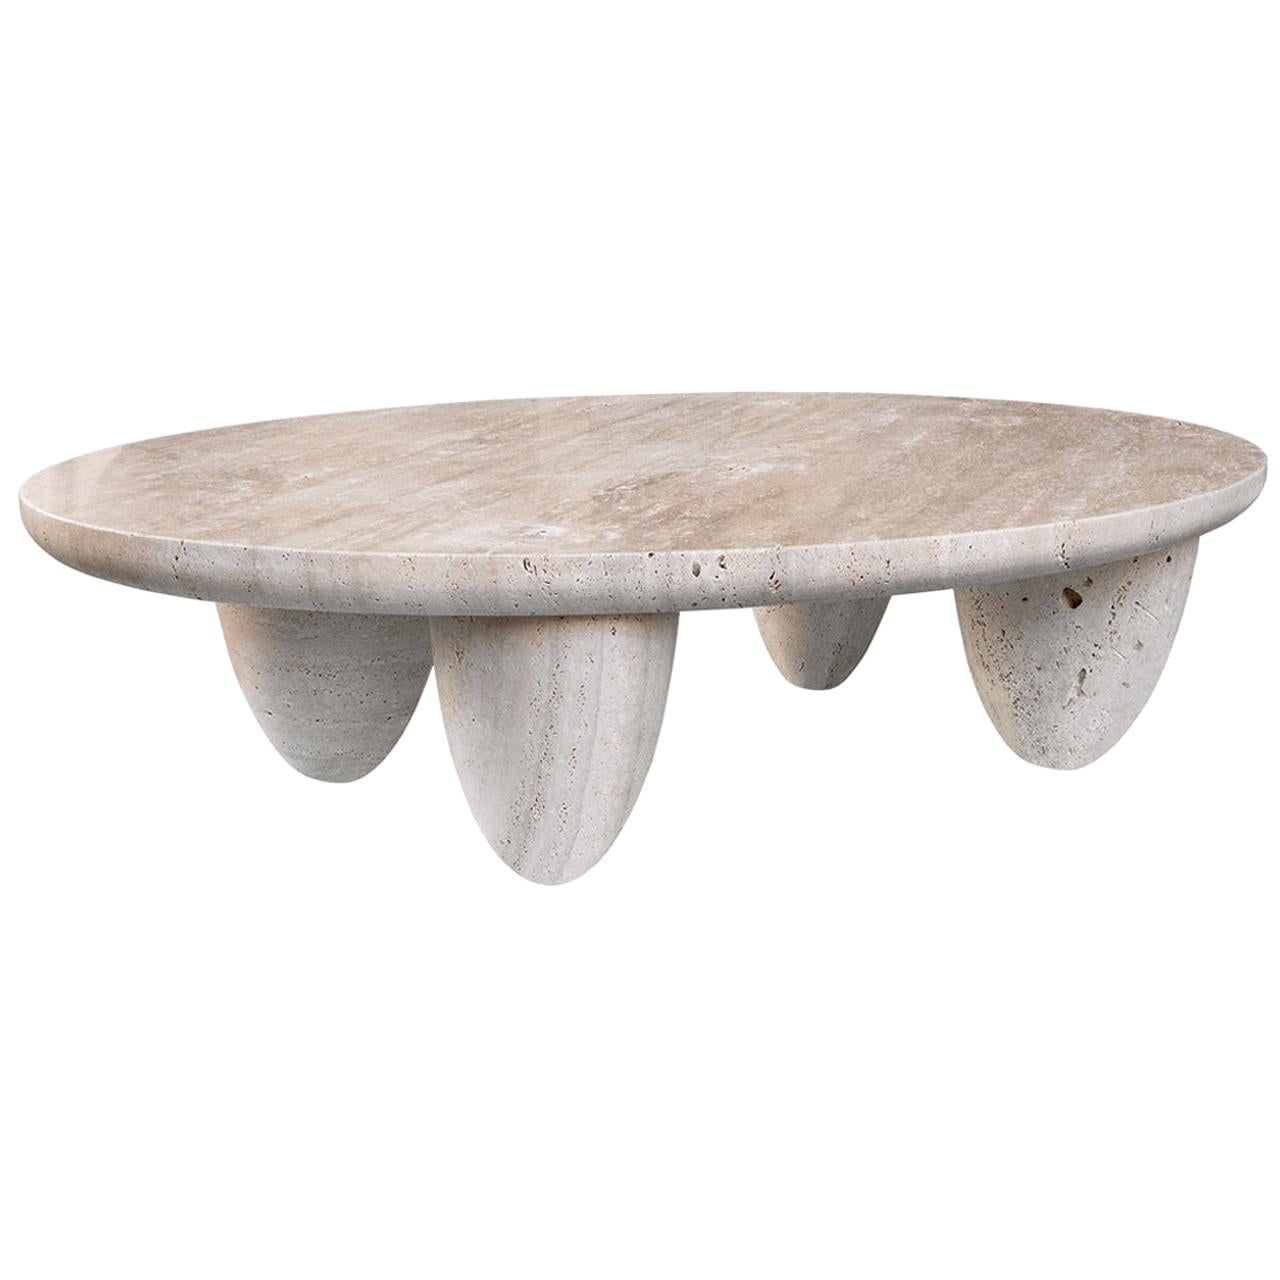 Contemporary Minimal Round Coffee Center Table in Travertine Stone Natural Pores